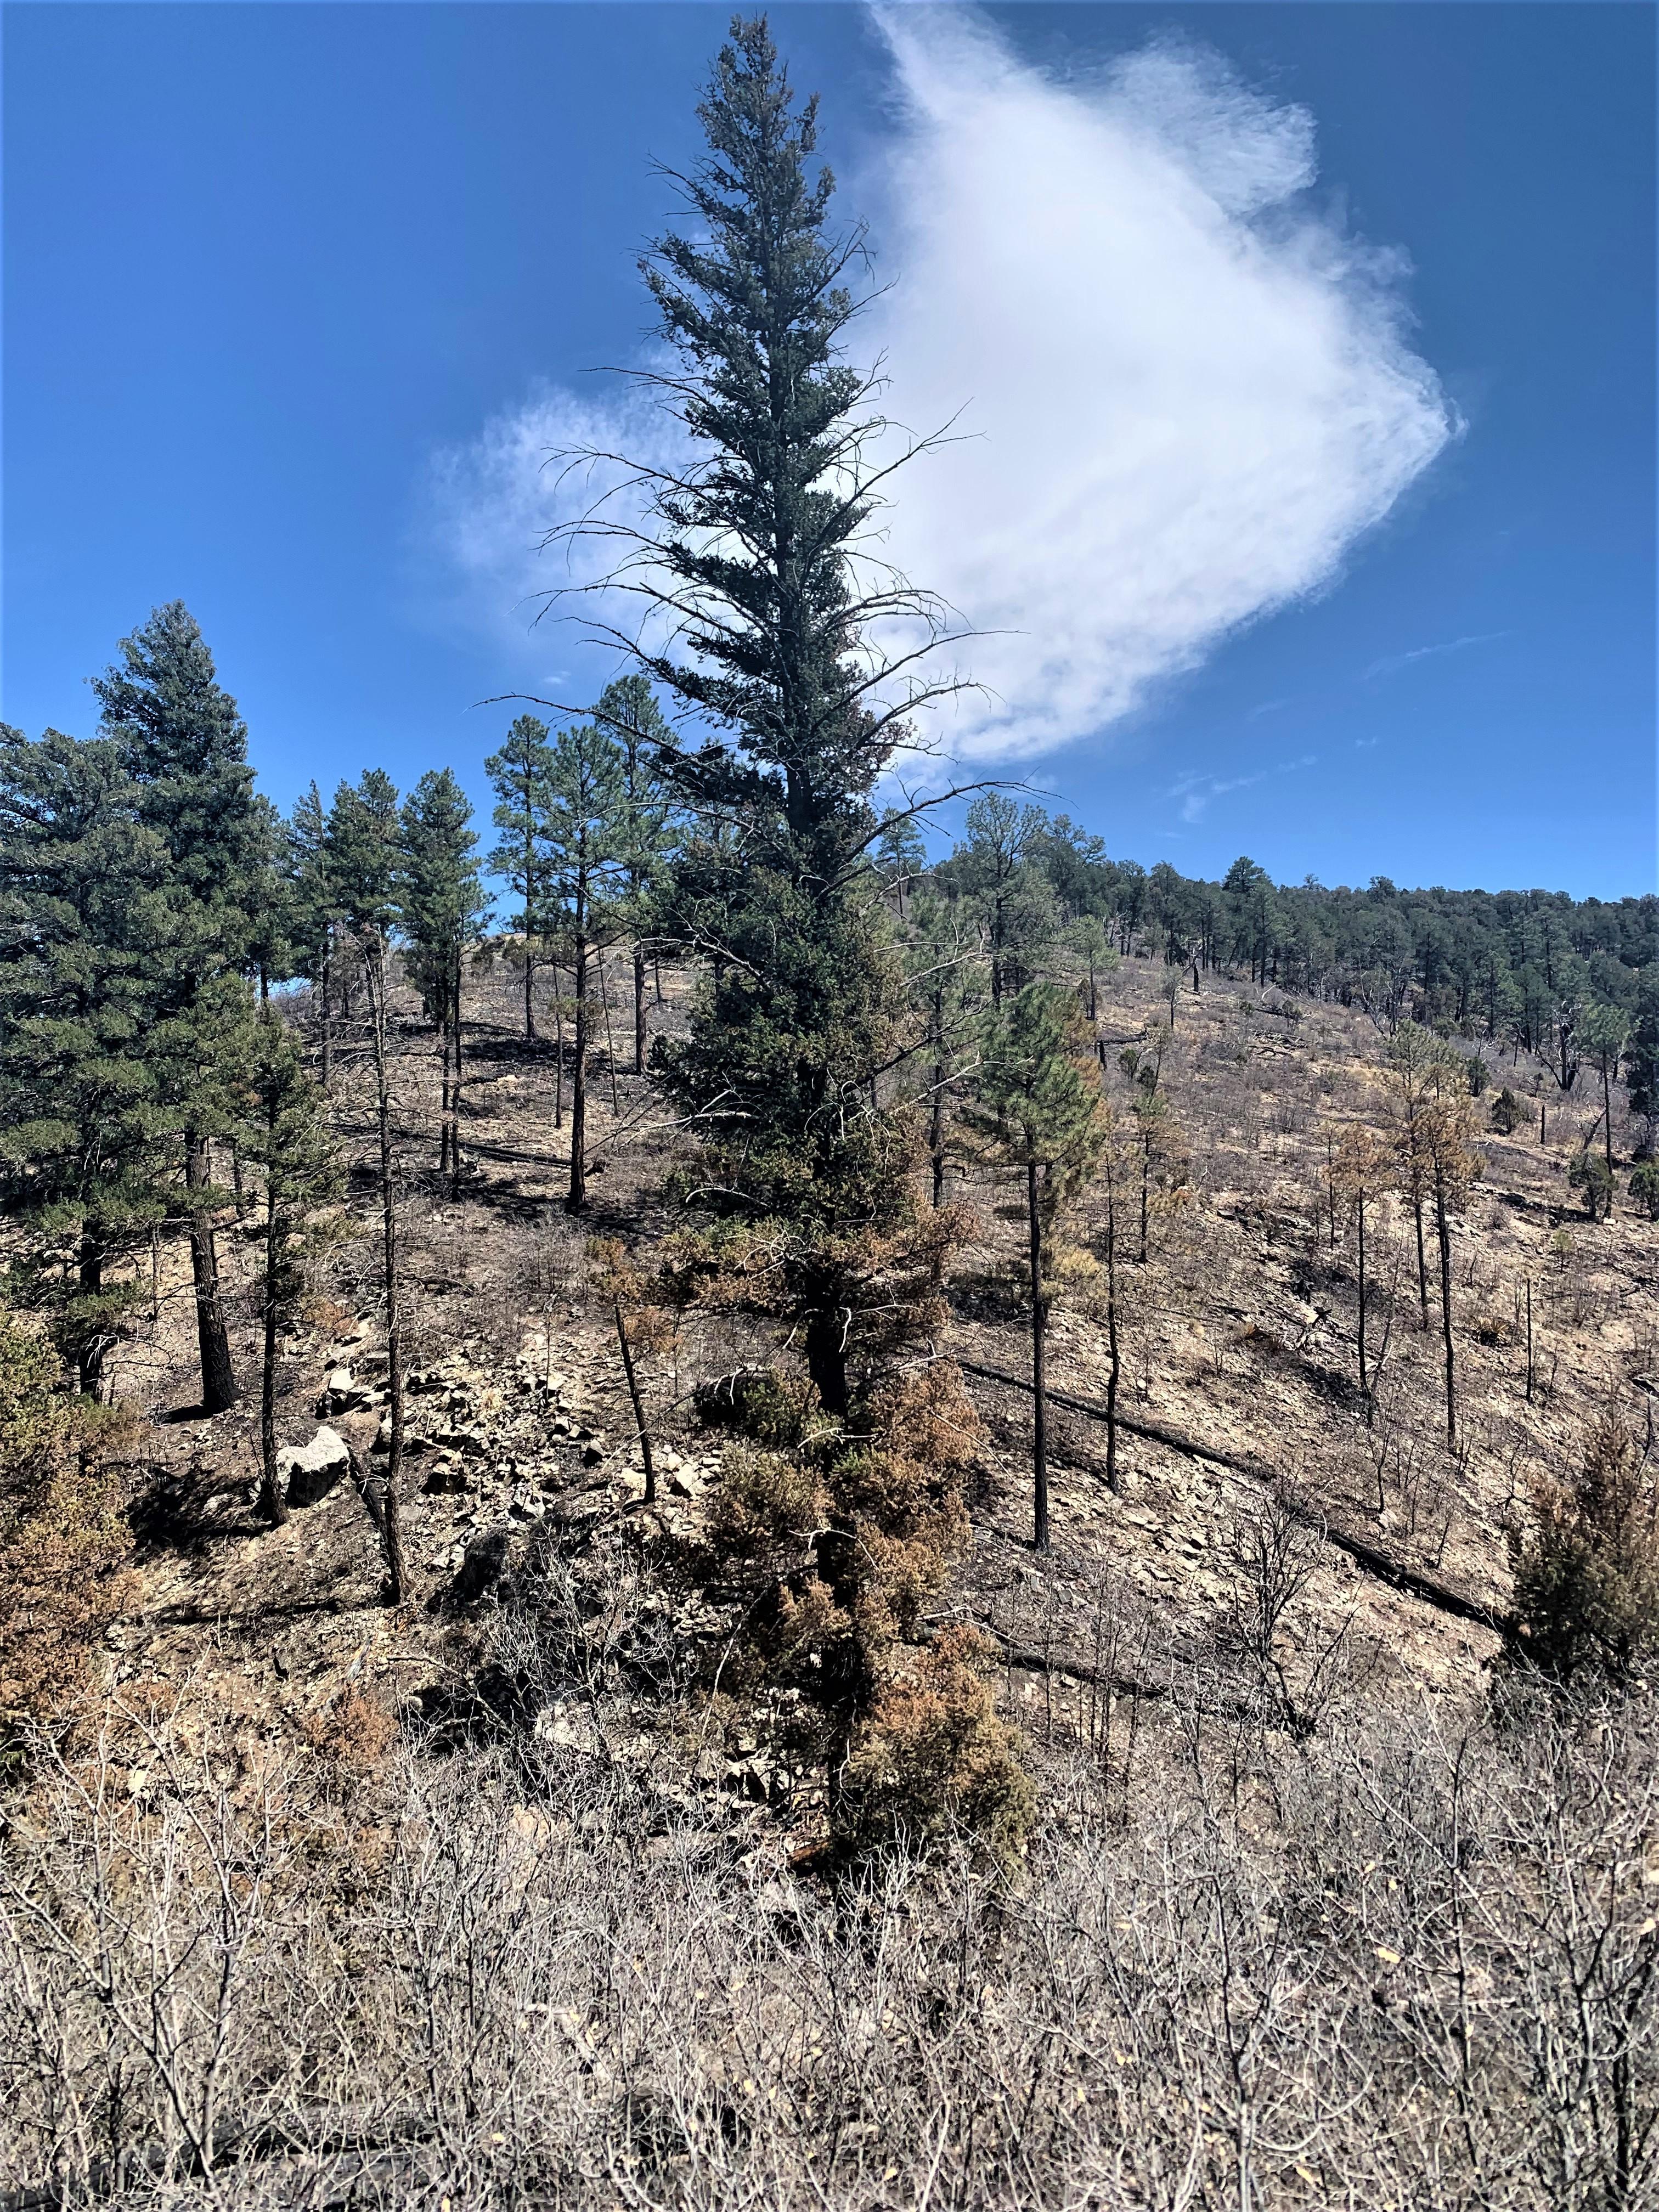 Image showing A Reburned Tree in McBride Burned Area